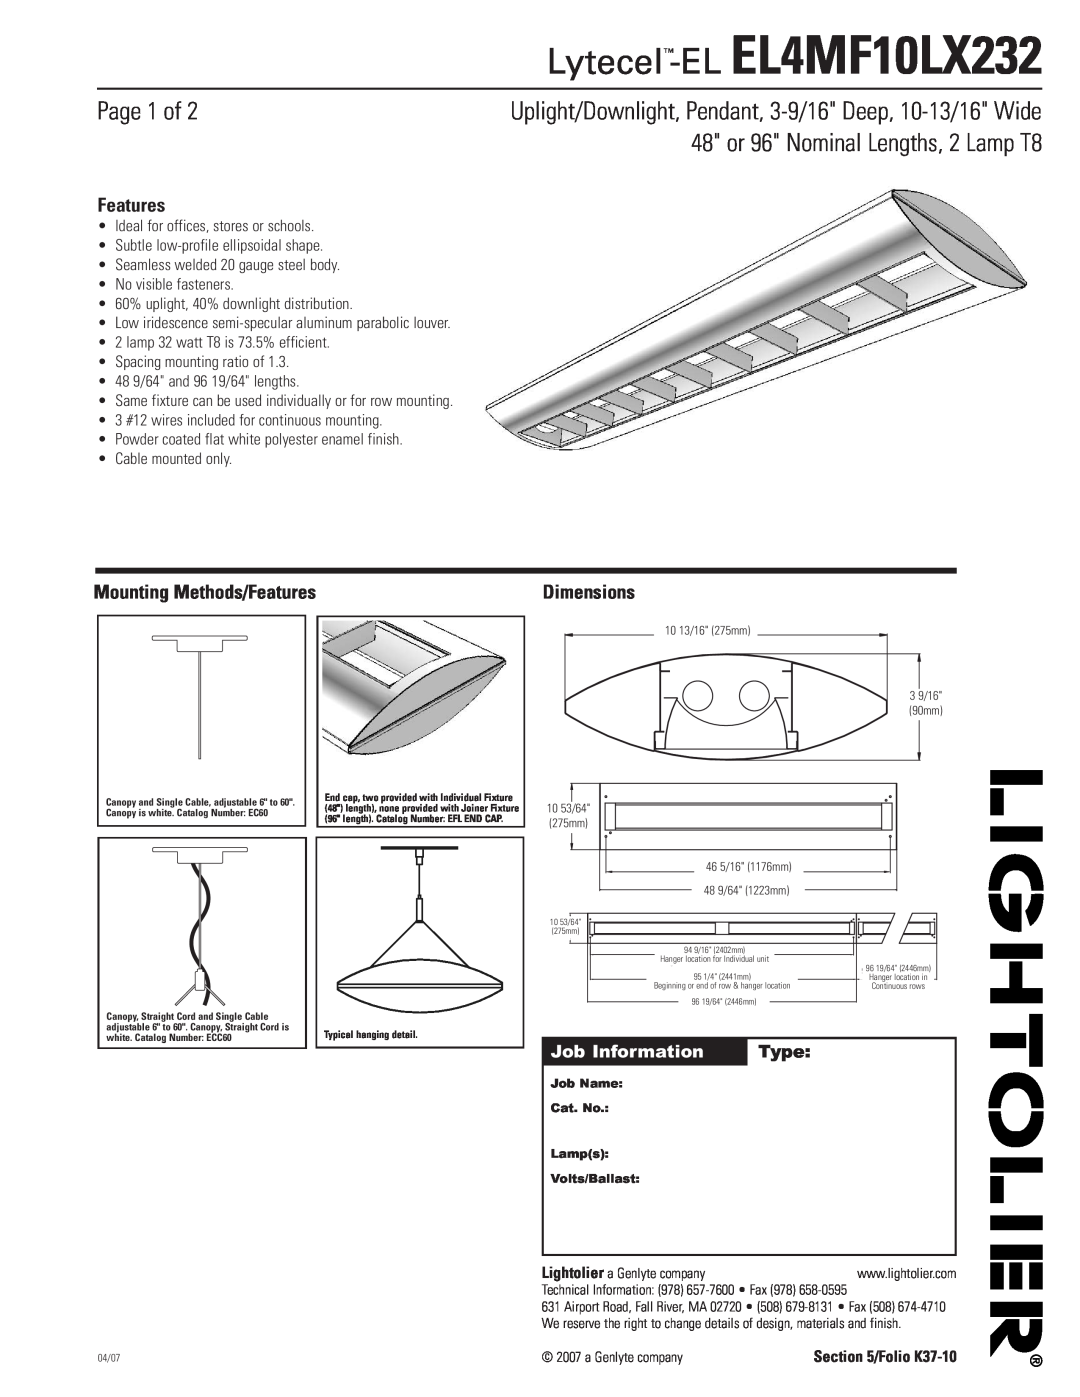 Lightolier dimensions Lytecel-EL EL4MF10LX232, Page 1 of, 48 or 96 Nominal Lengths, 2 Lamp T8, Job Information, Type 